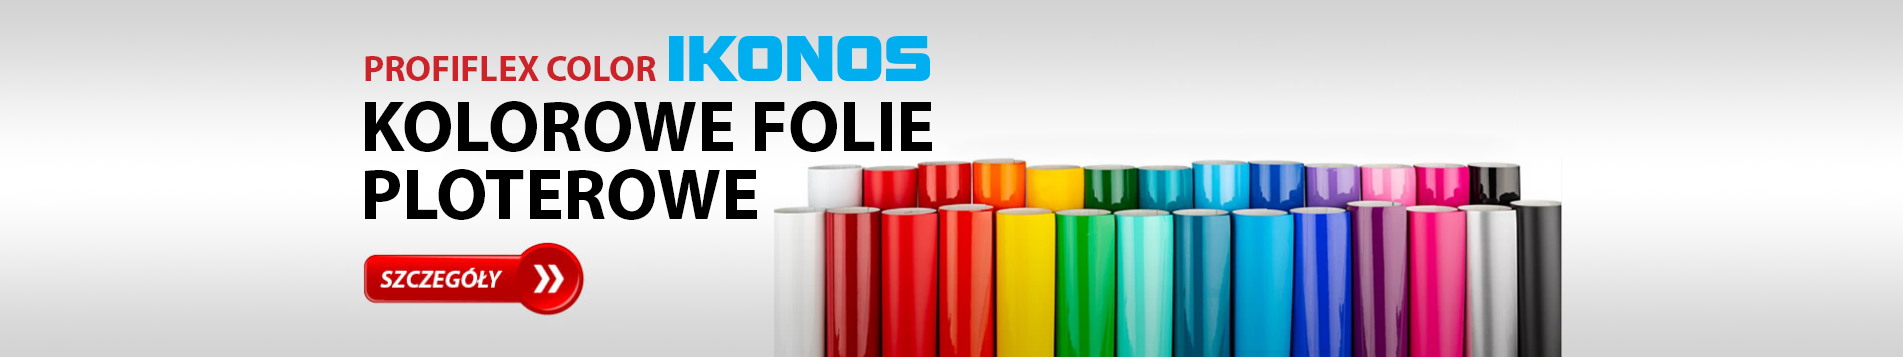 Kolorowe folie ploterowe Profiflex Color Ikonos